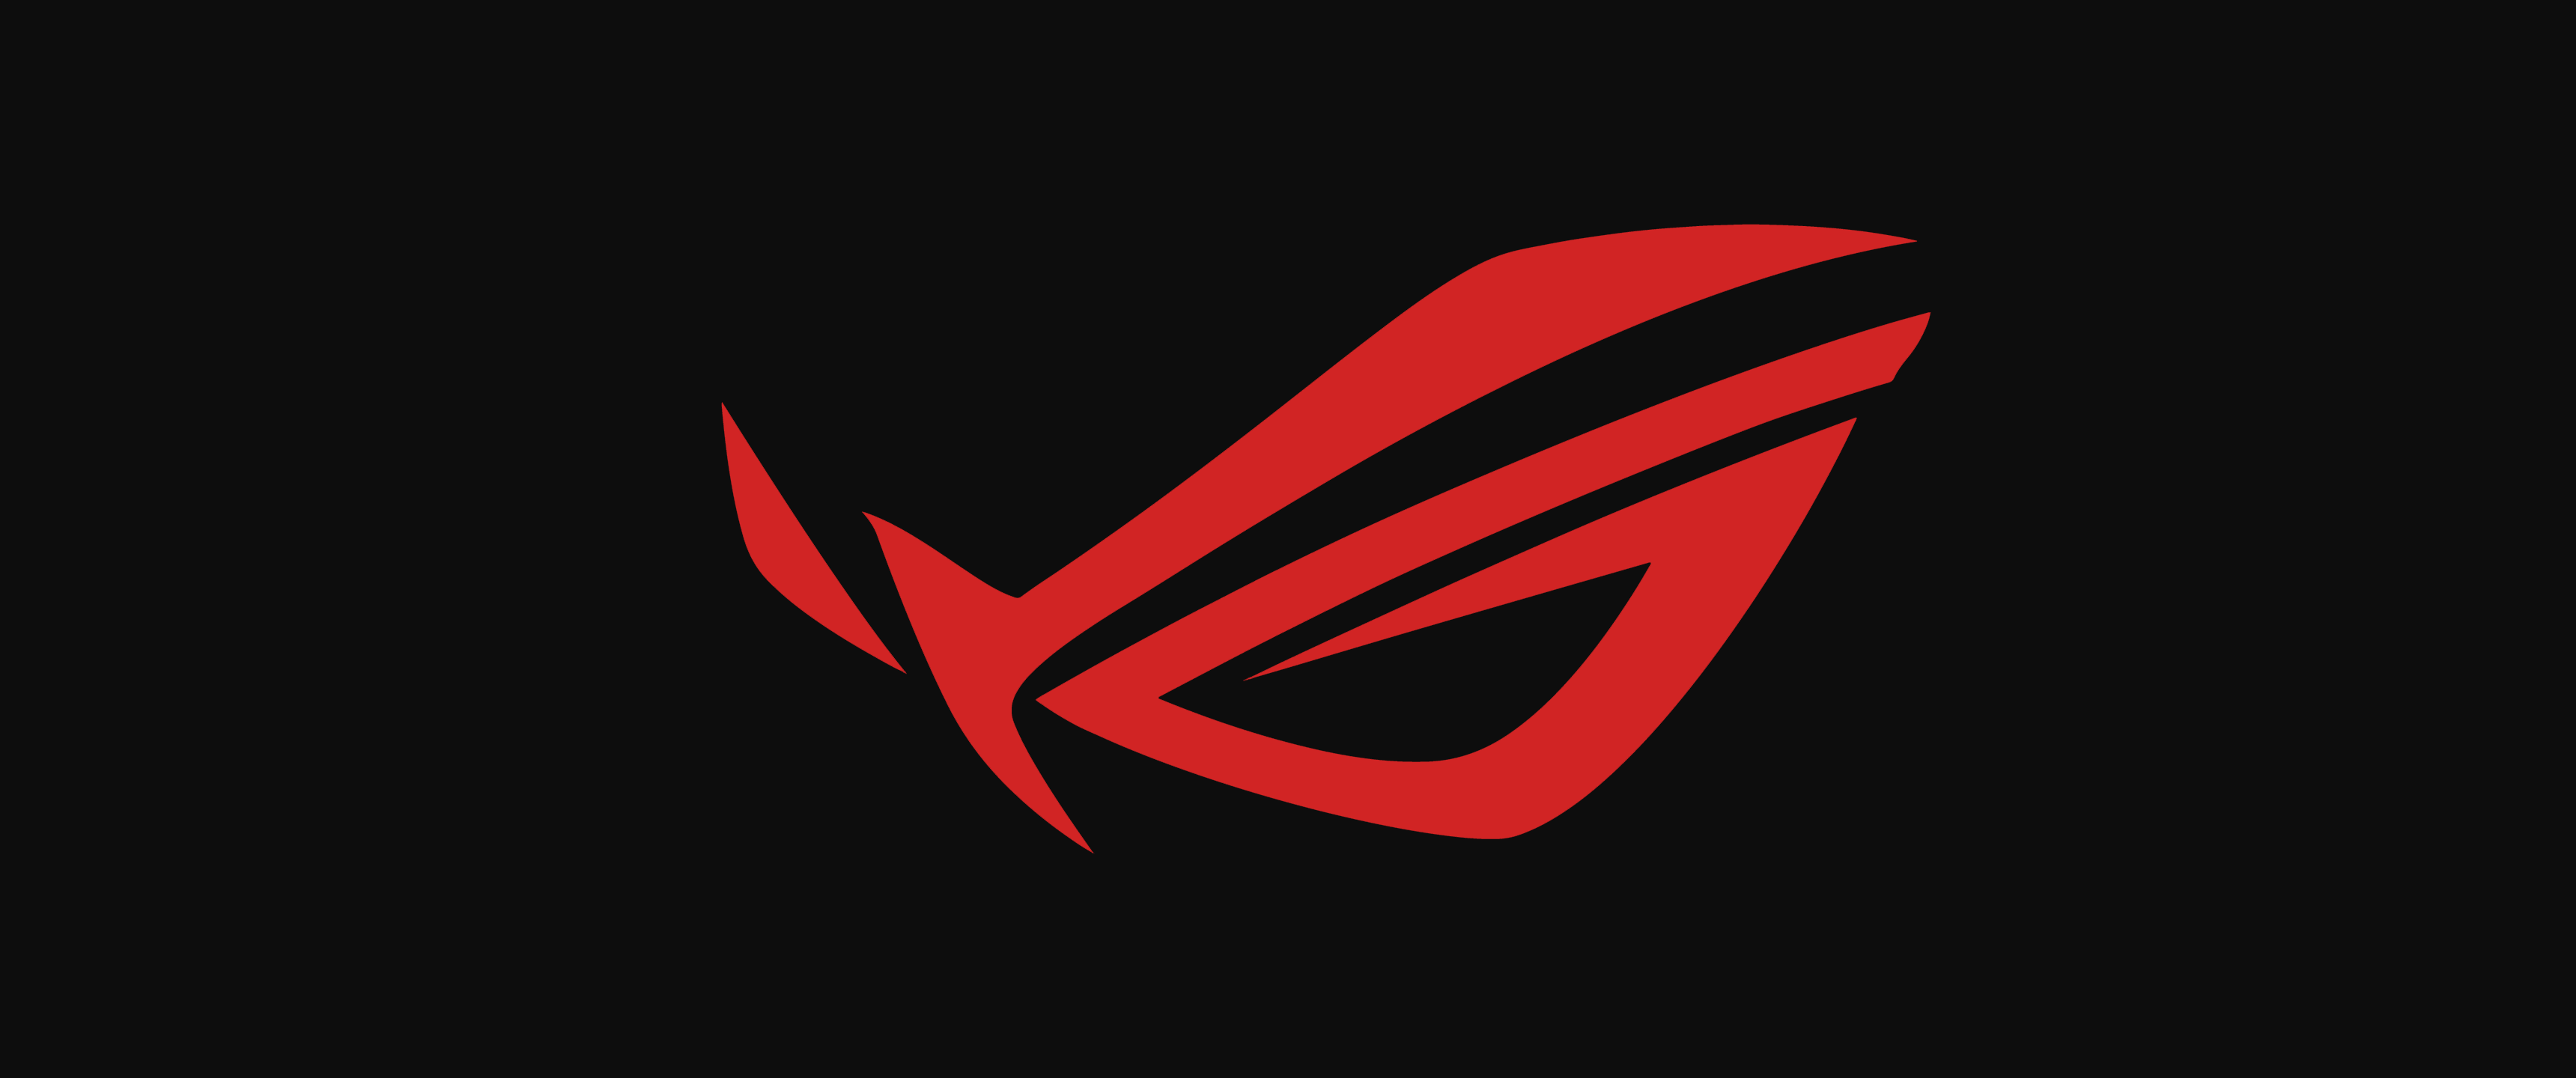 Rog Logo - LogoDix